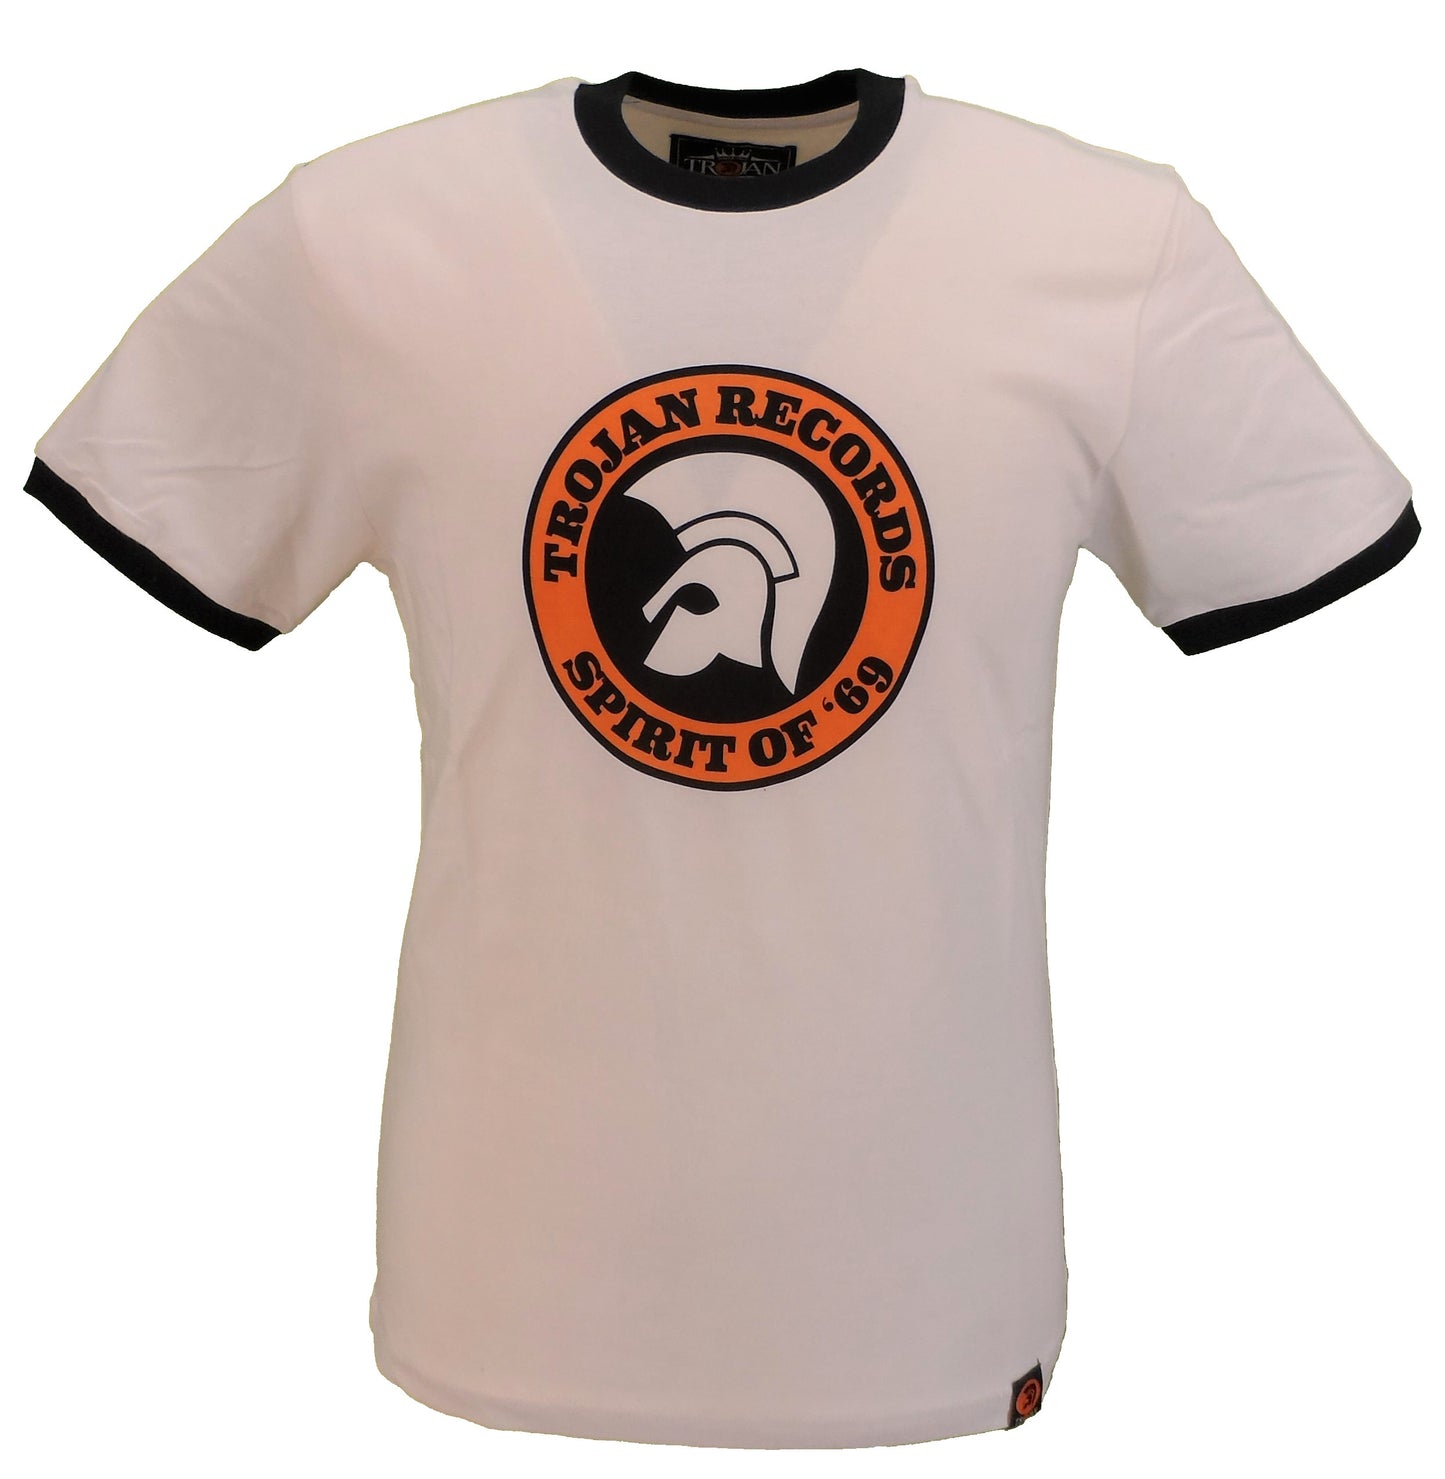 Trojan Records Mens Ecru Spirit of 69 100% Cotton Peach T-Shirt